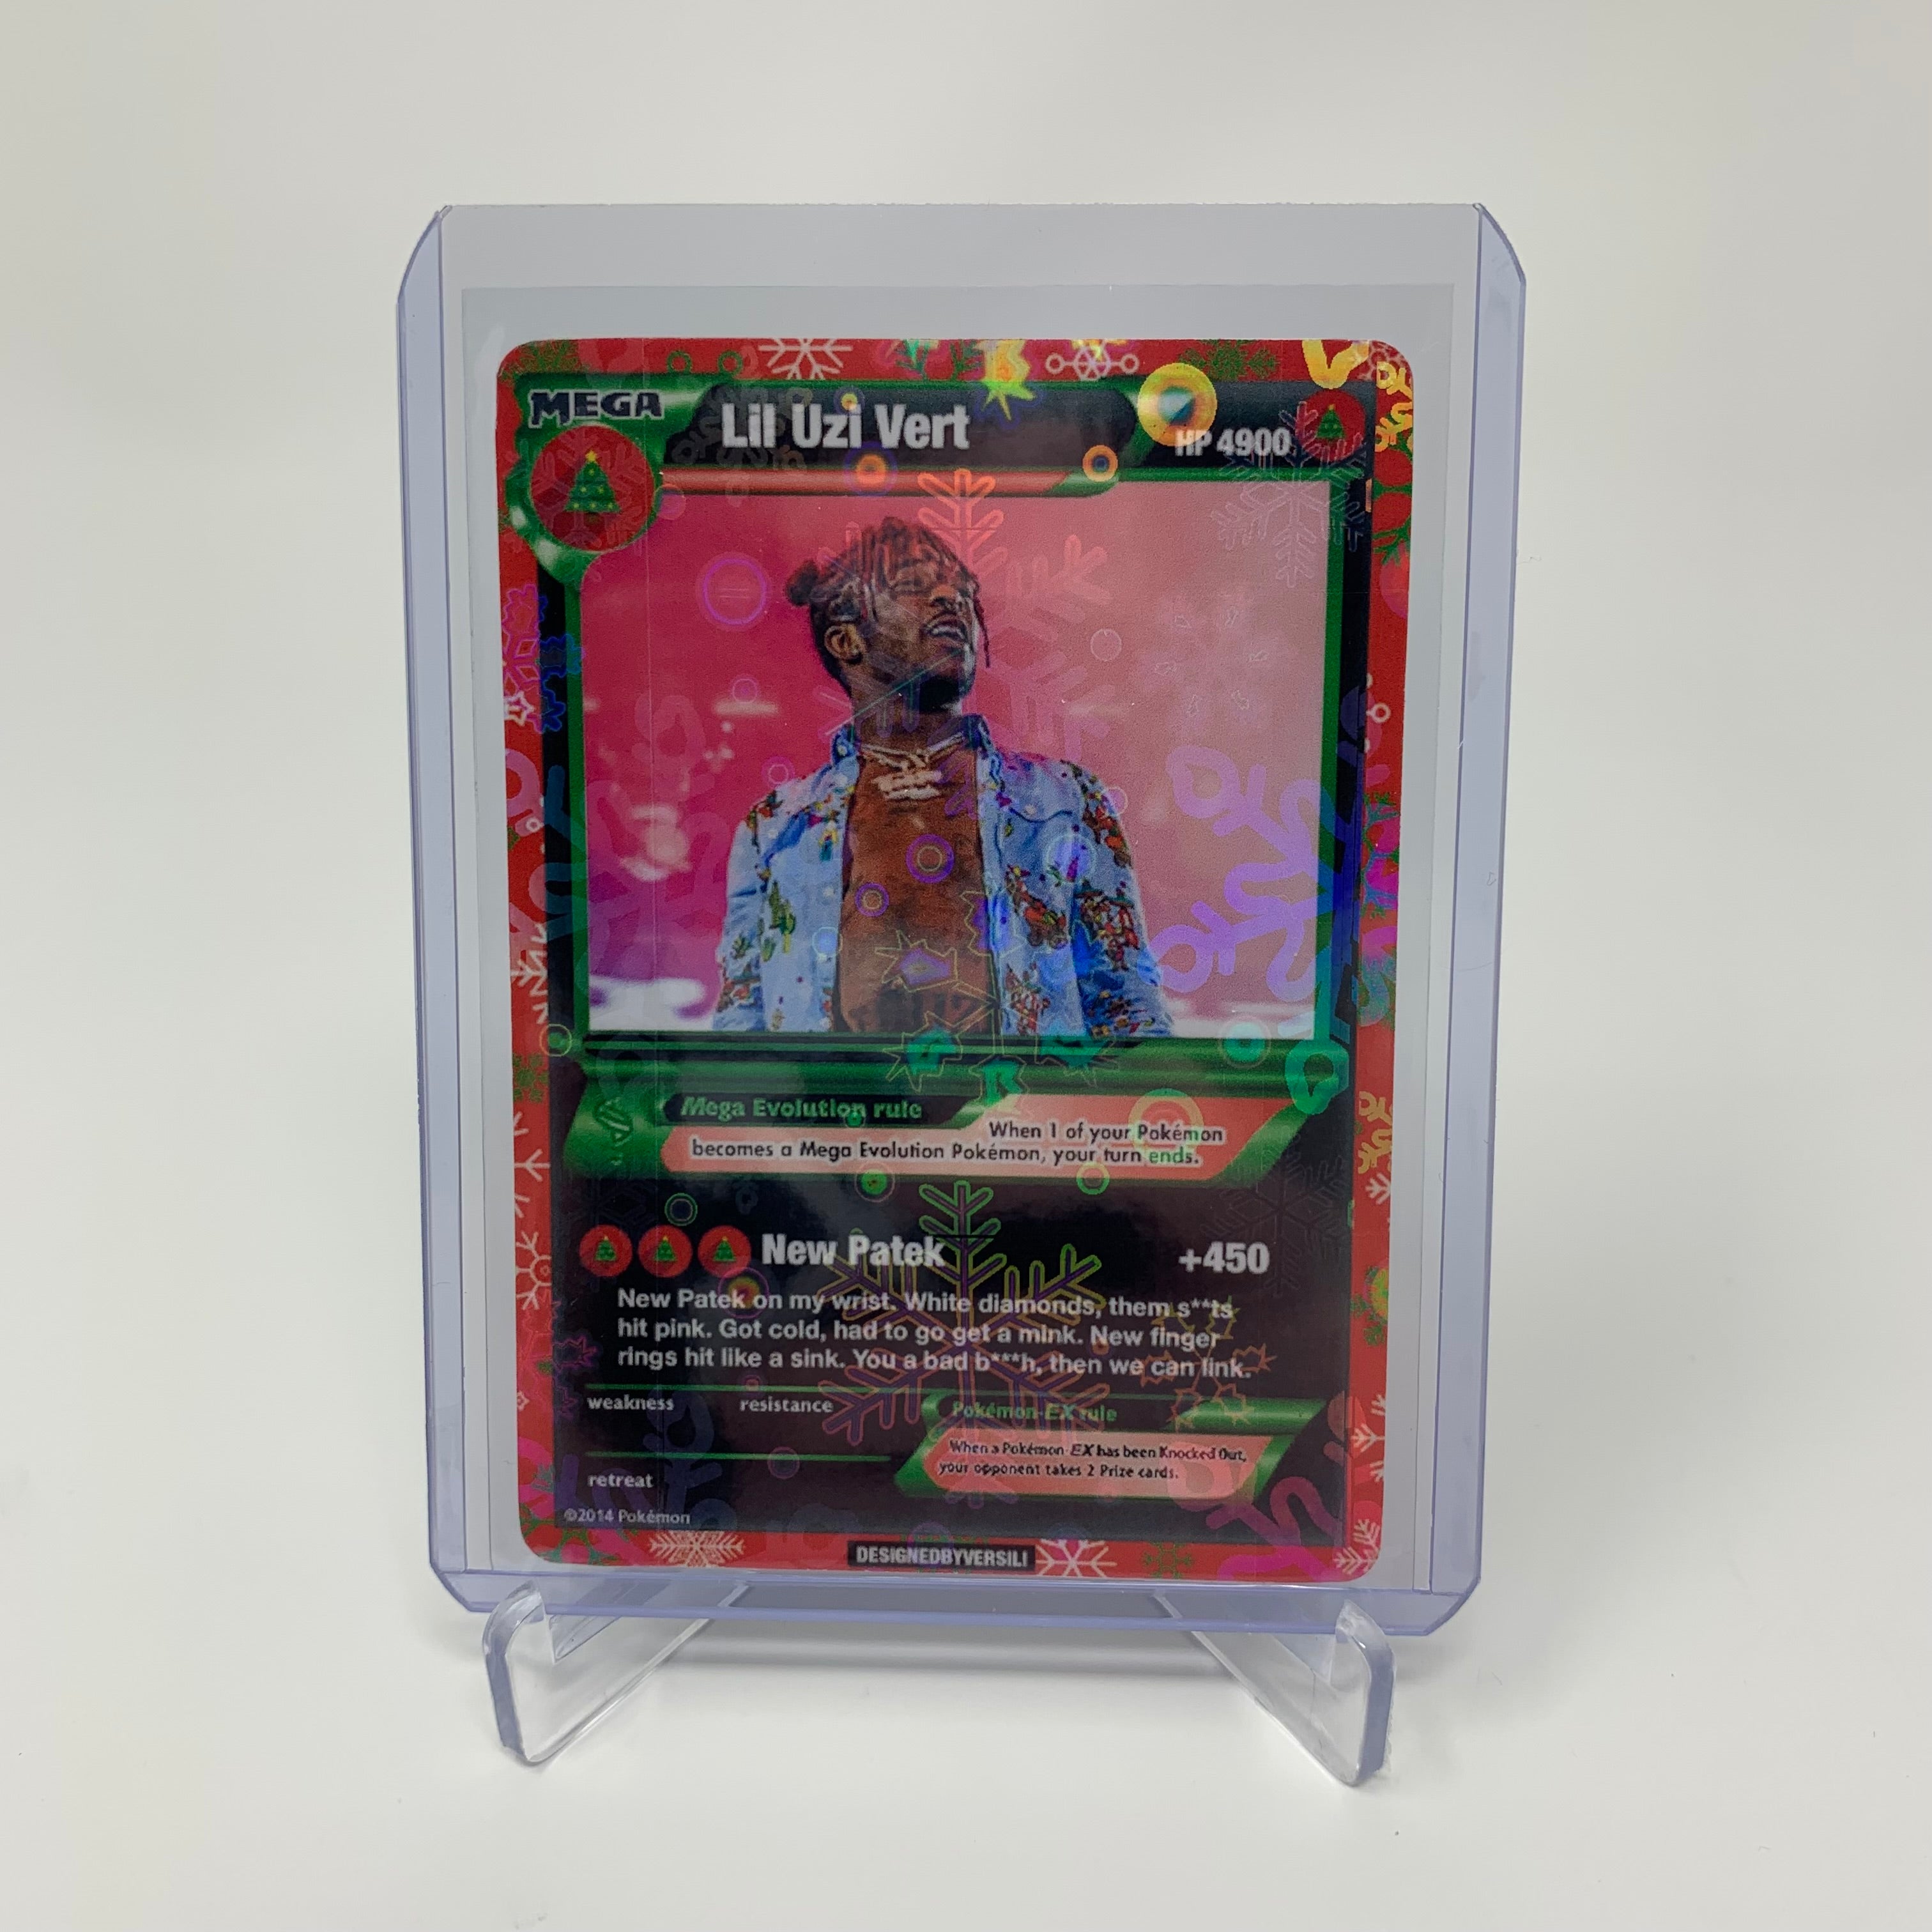 Lil Uzi Vert Pokémon Card (Christmas)